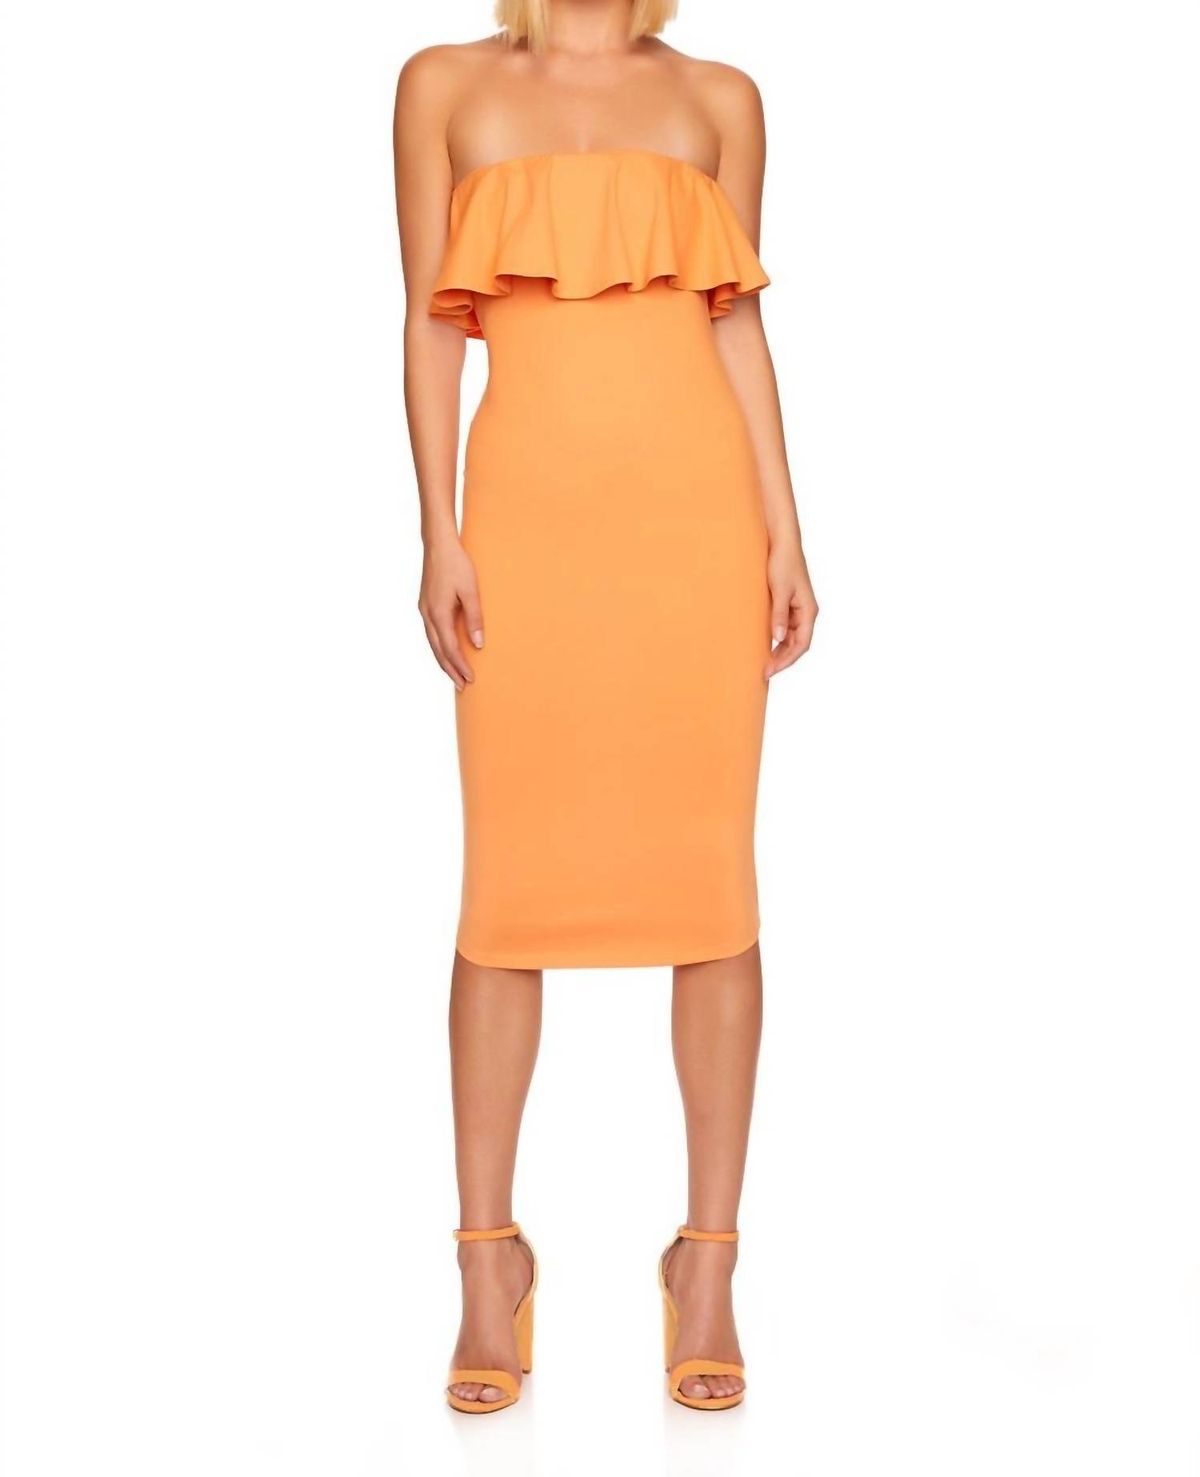 Style 1-3291939451-3236 Susana Monaco Size S Strapless Orange Cocktail Dress on Queenly